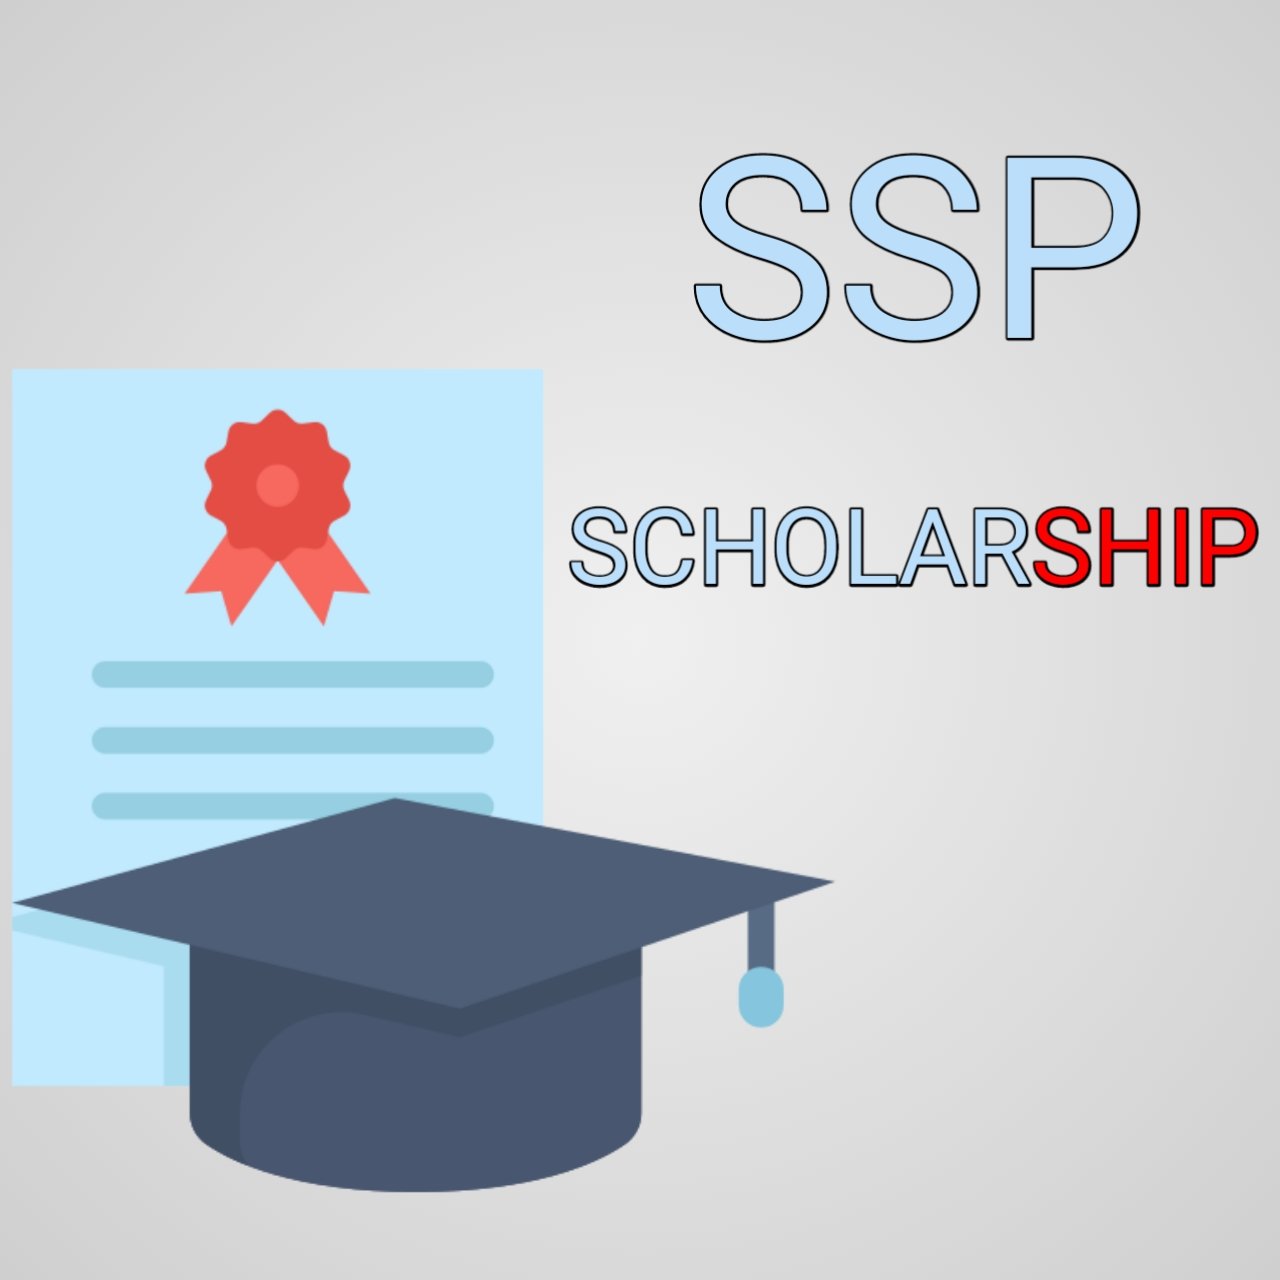 SSP scholarship